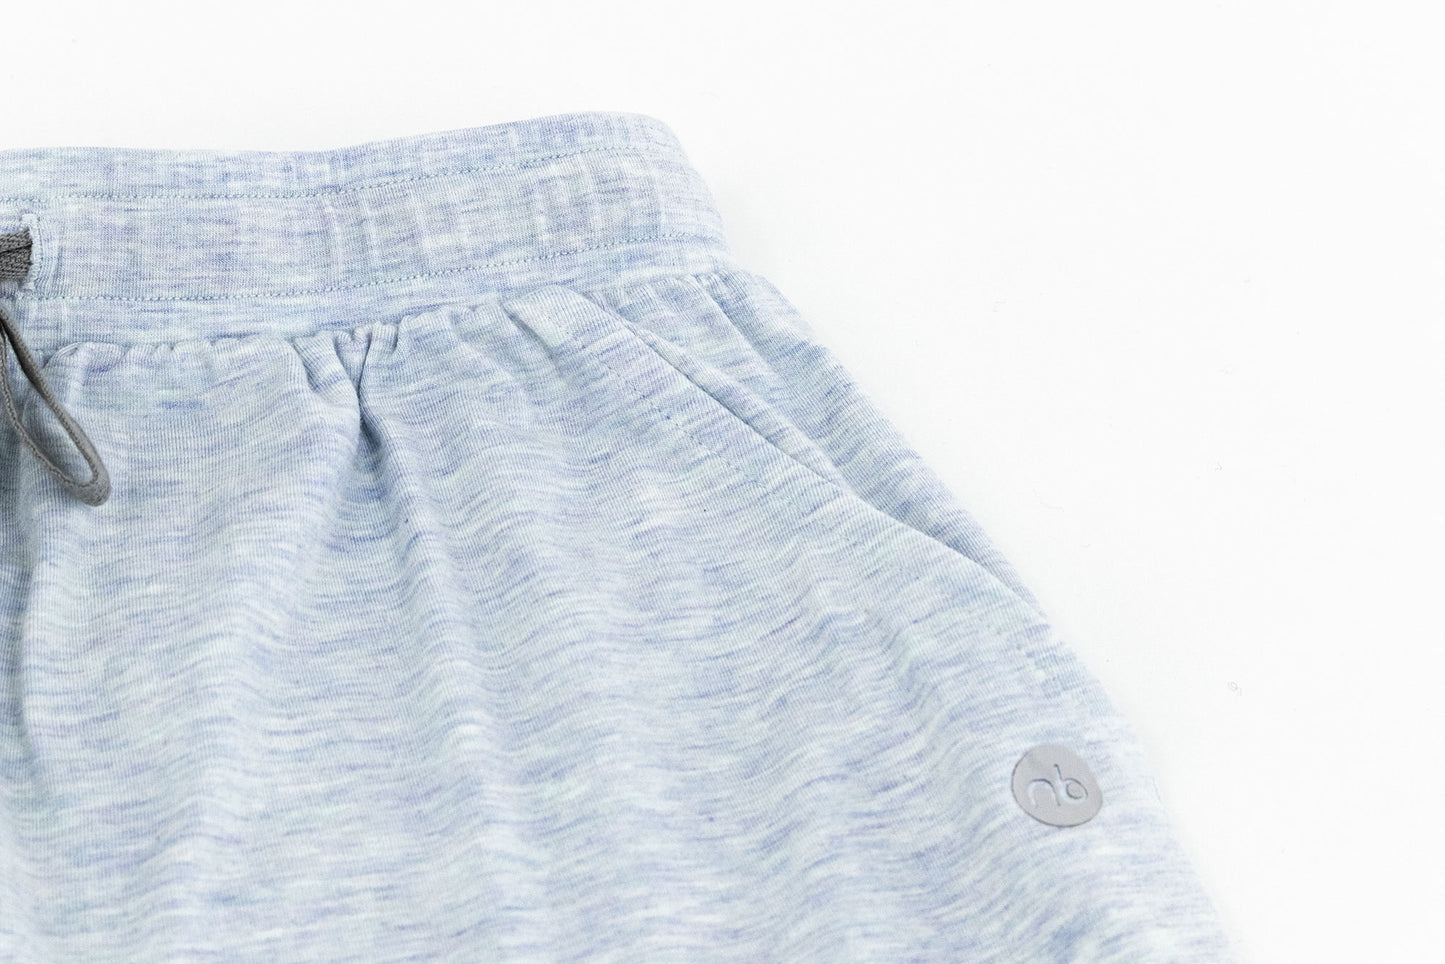 Women's Basics Bamboo Cotton Shorts - Grey Dawn - Nest Designs